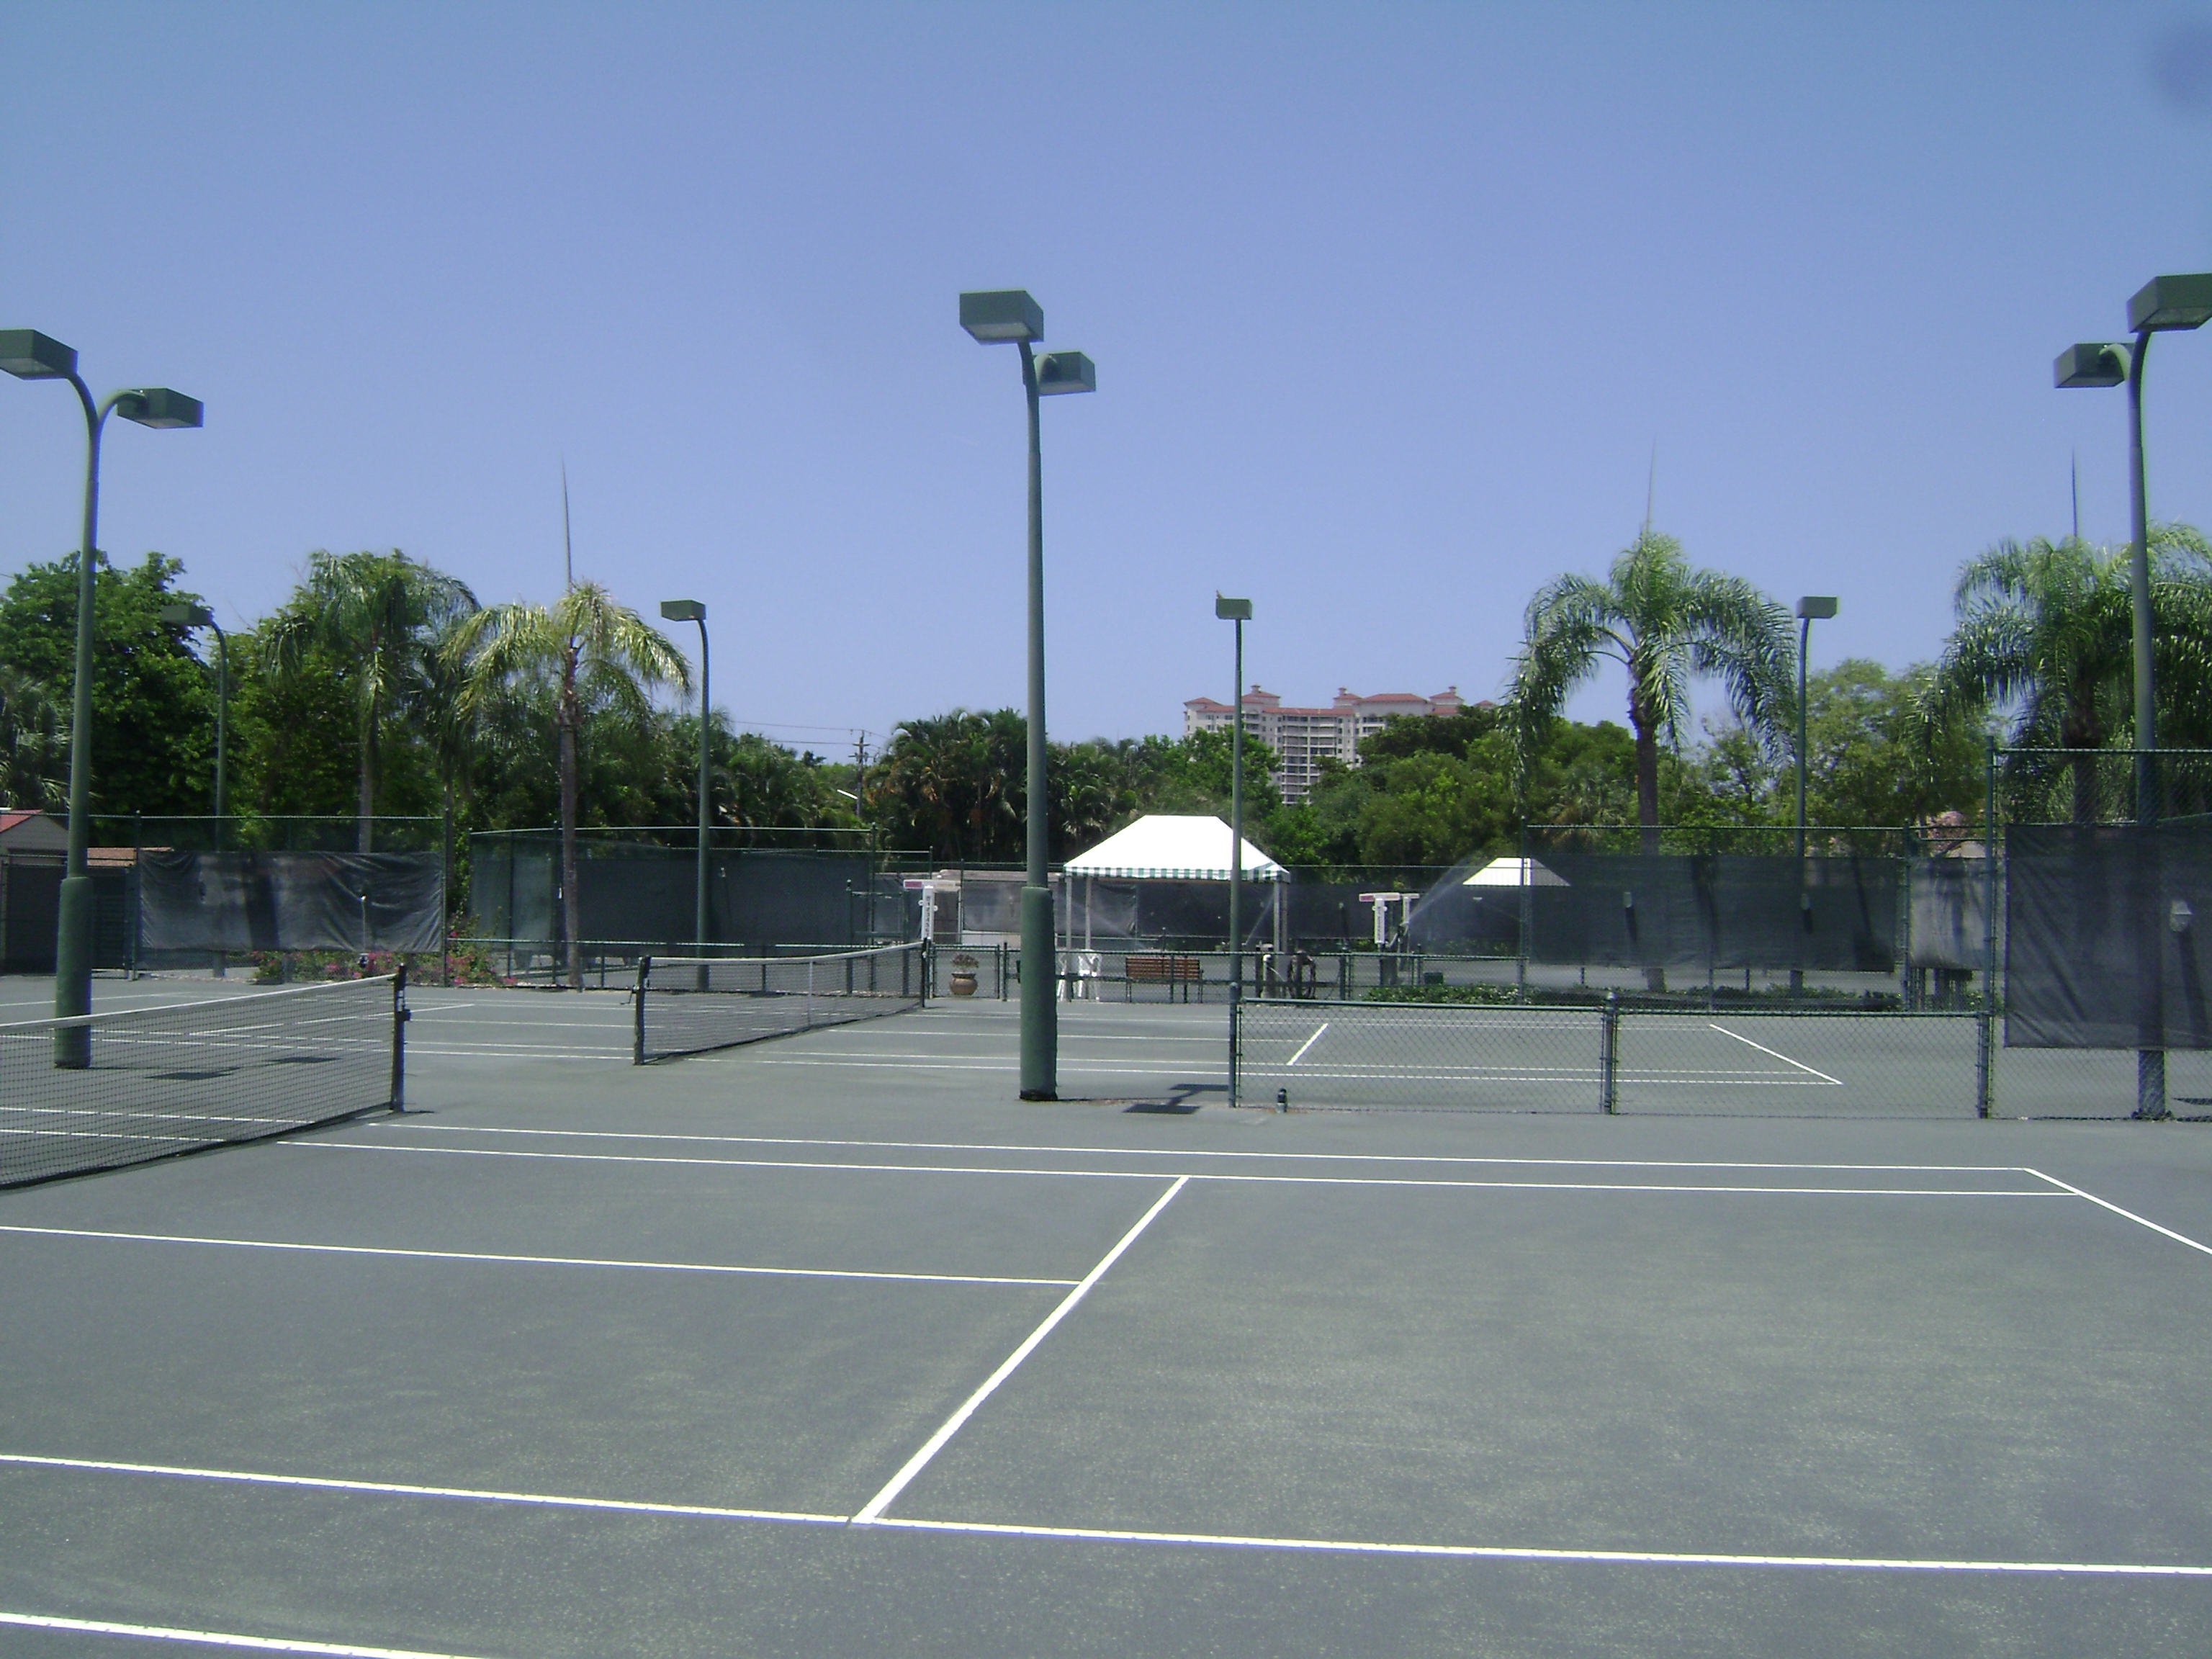 Tennis courts at Beachwalk in Naples, Florida.